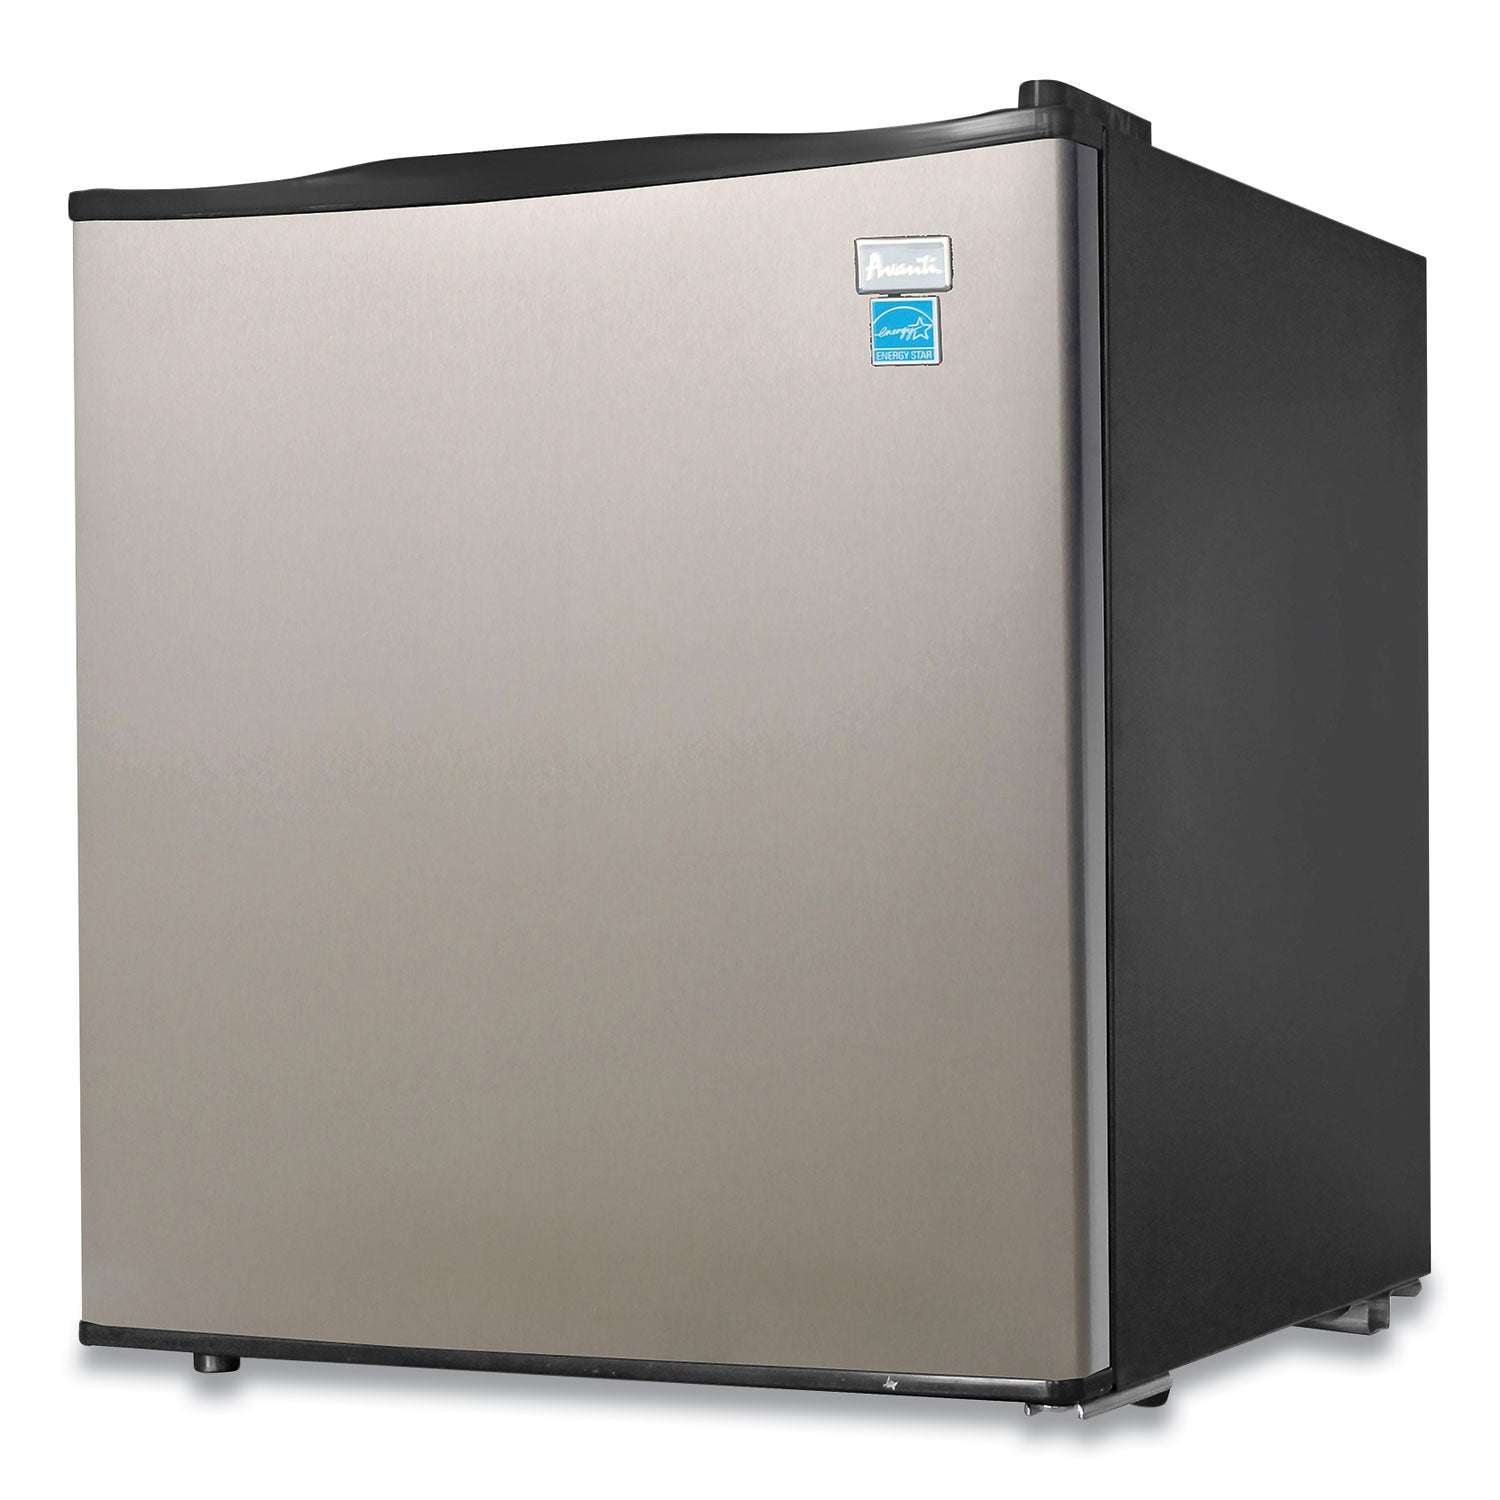 17-cu-ft-all-refrigerator-stainless-steel-black_avaar17t3s - 2